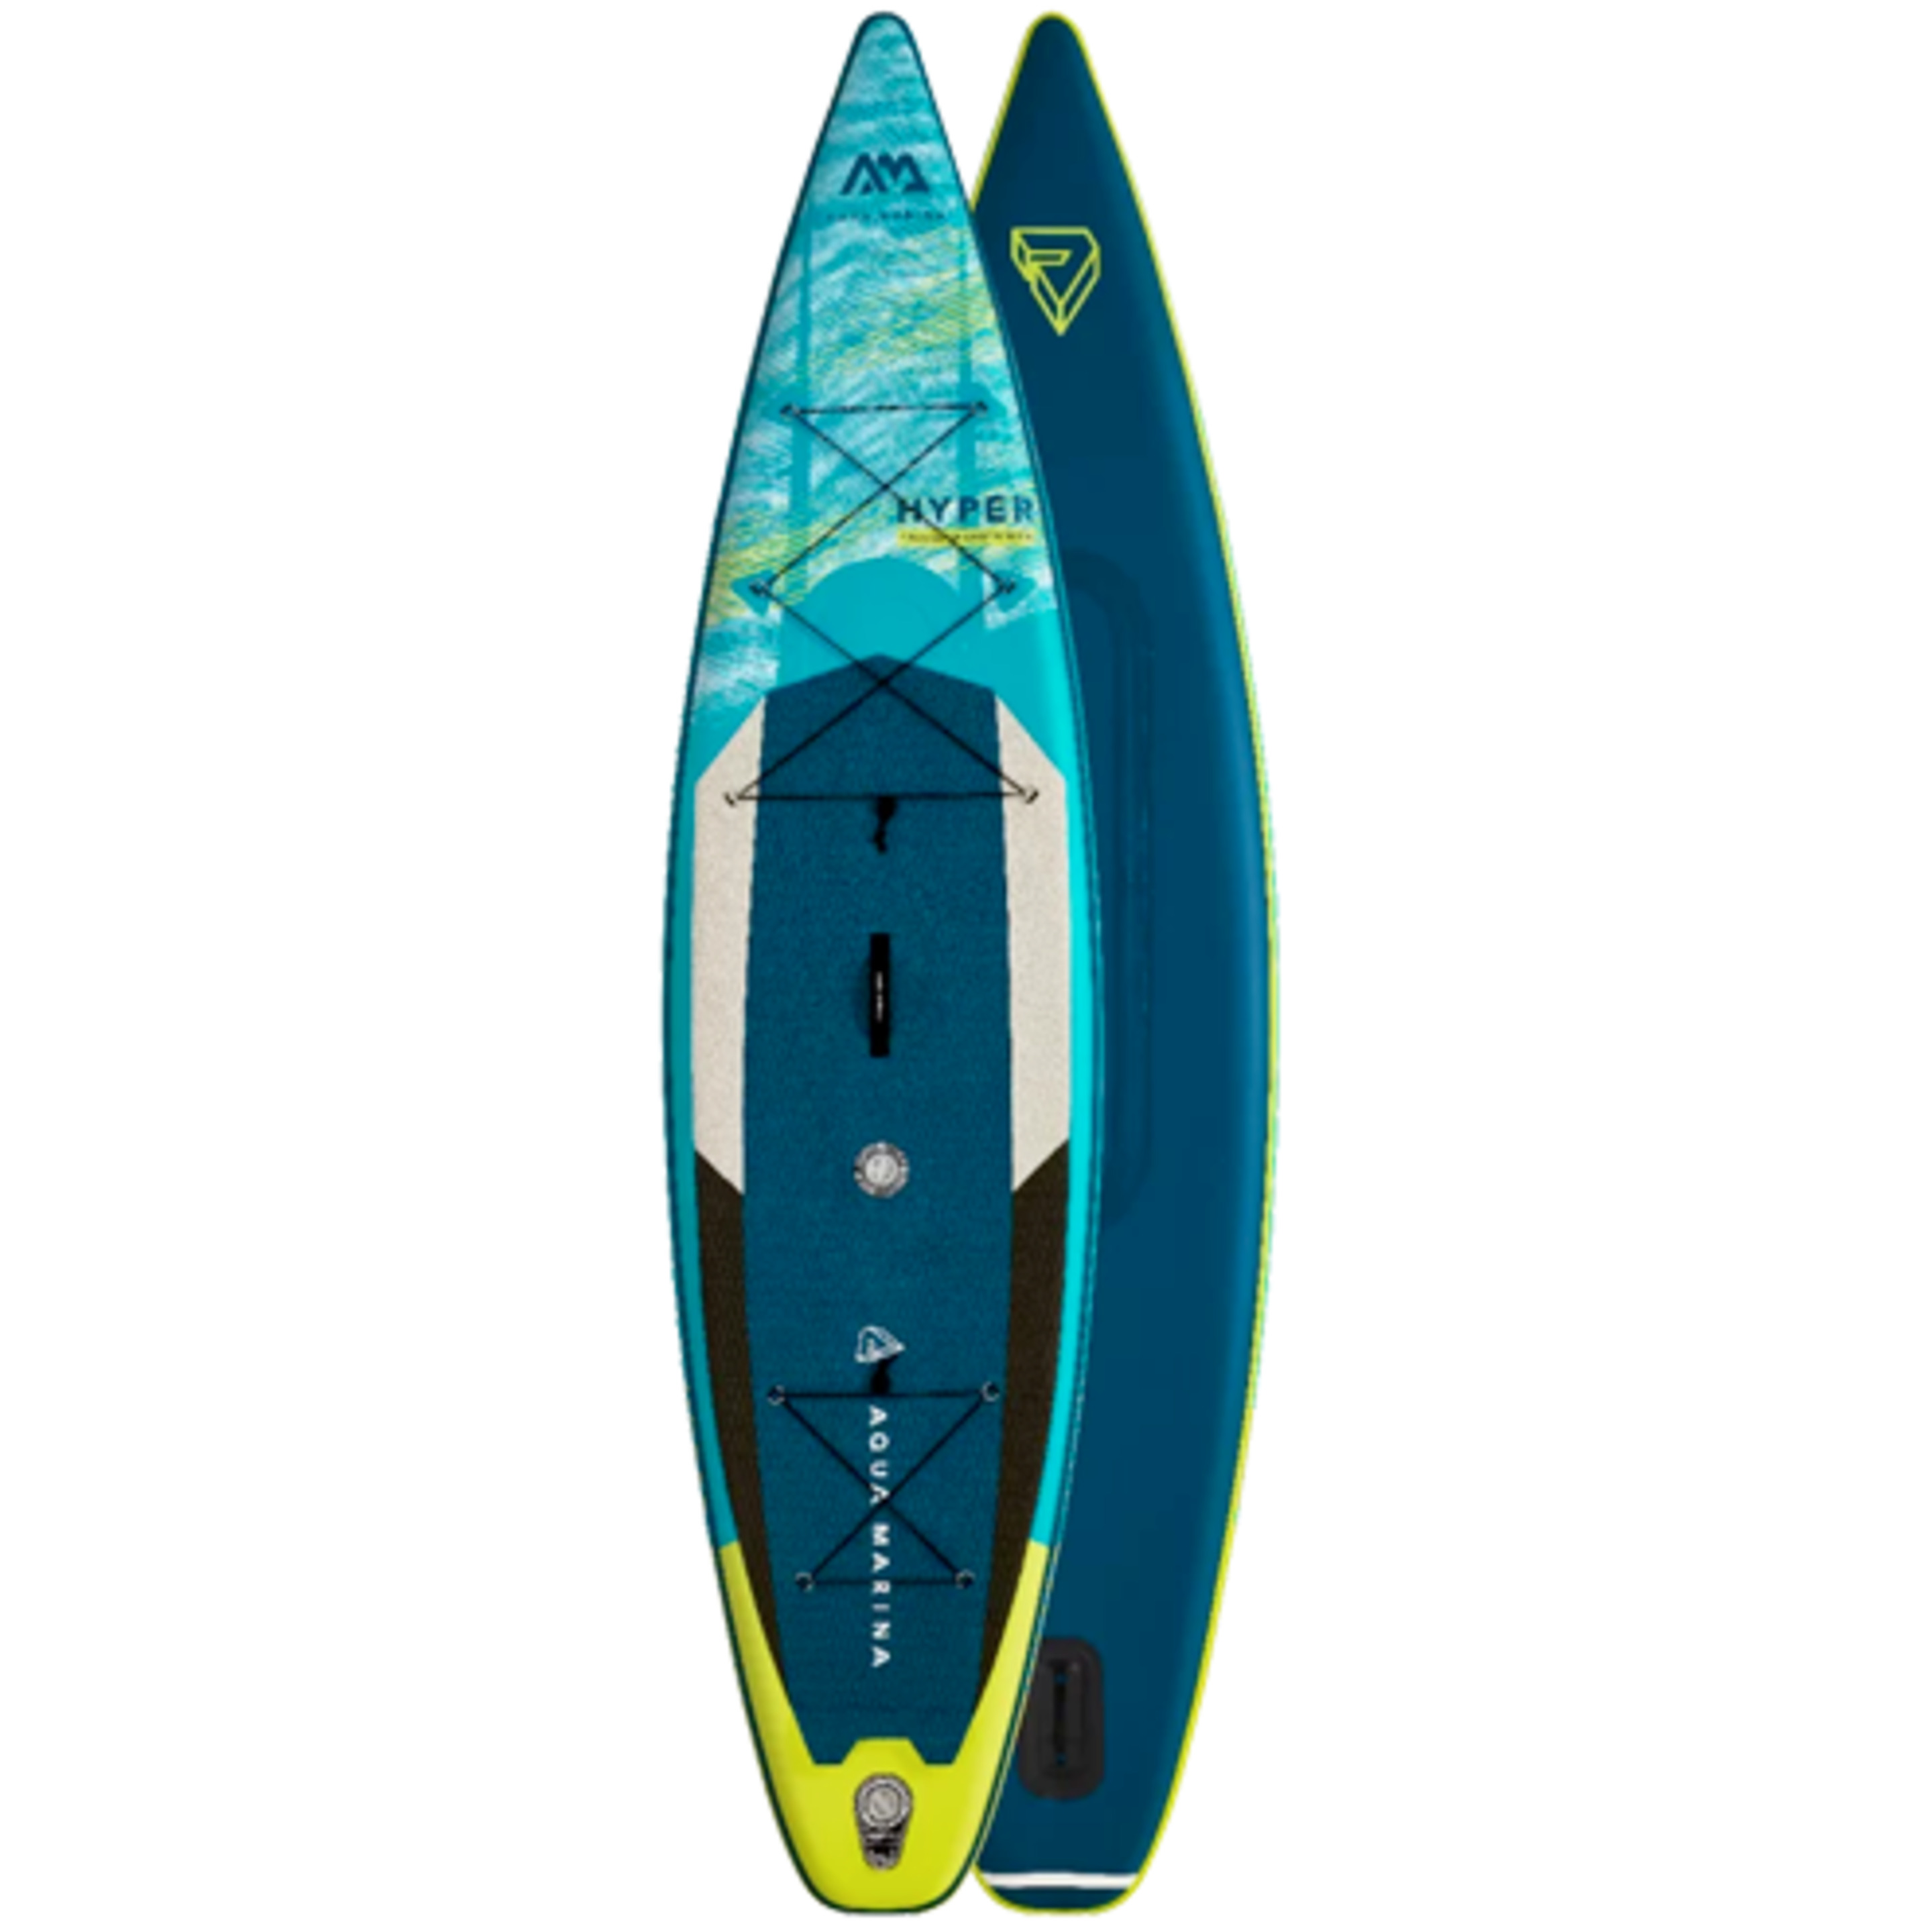 Tabla Paddle Surf Aqua Marina Hyper 11? 6? - Amarillo/Azul - Touring Series  MKP